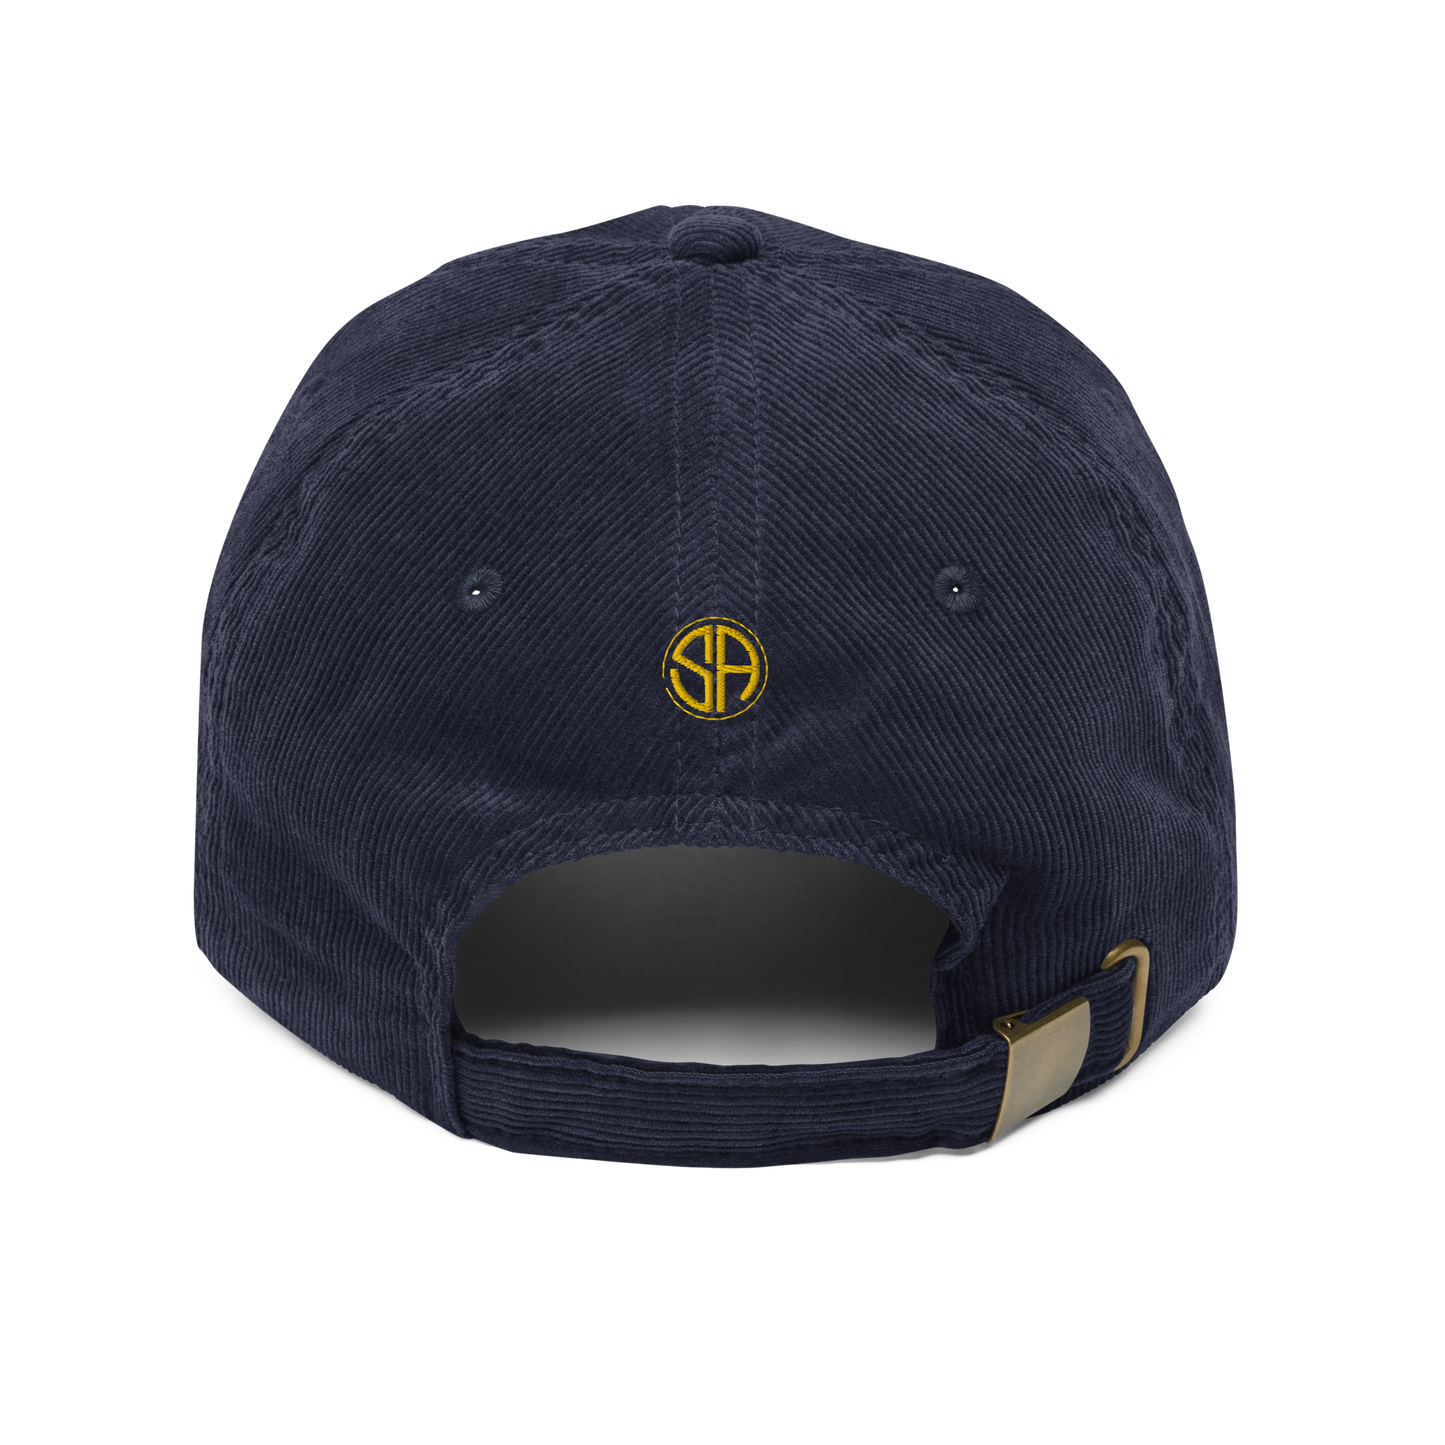 Home Field Advantage Custom Vintage Corduroy Baseball Hat navy gold